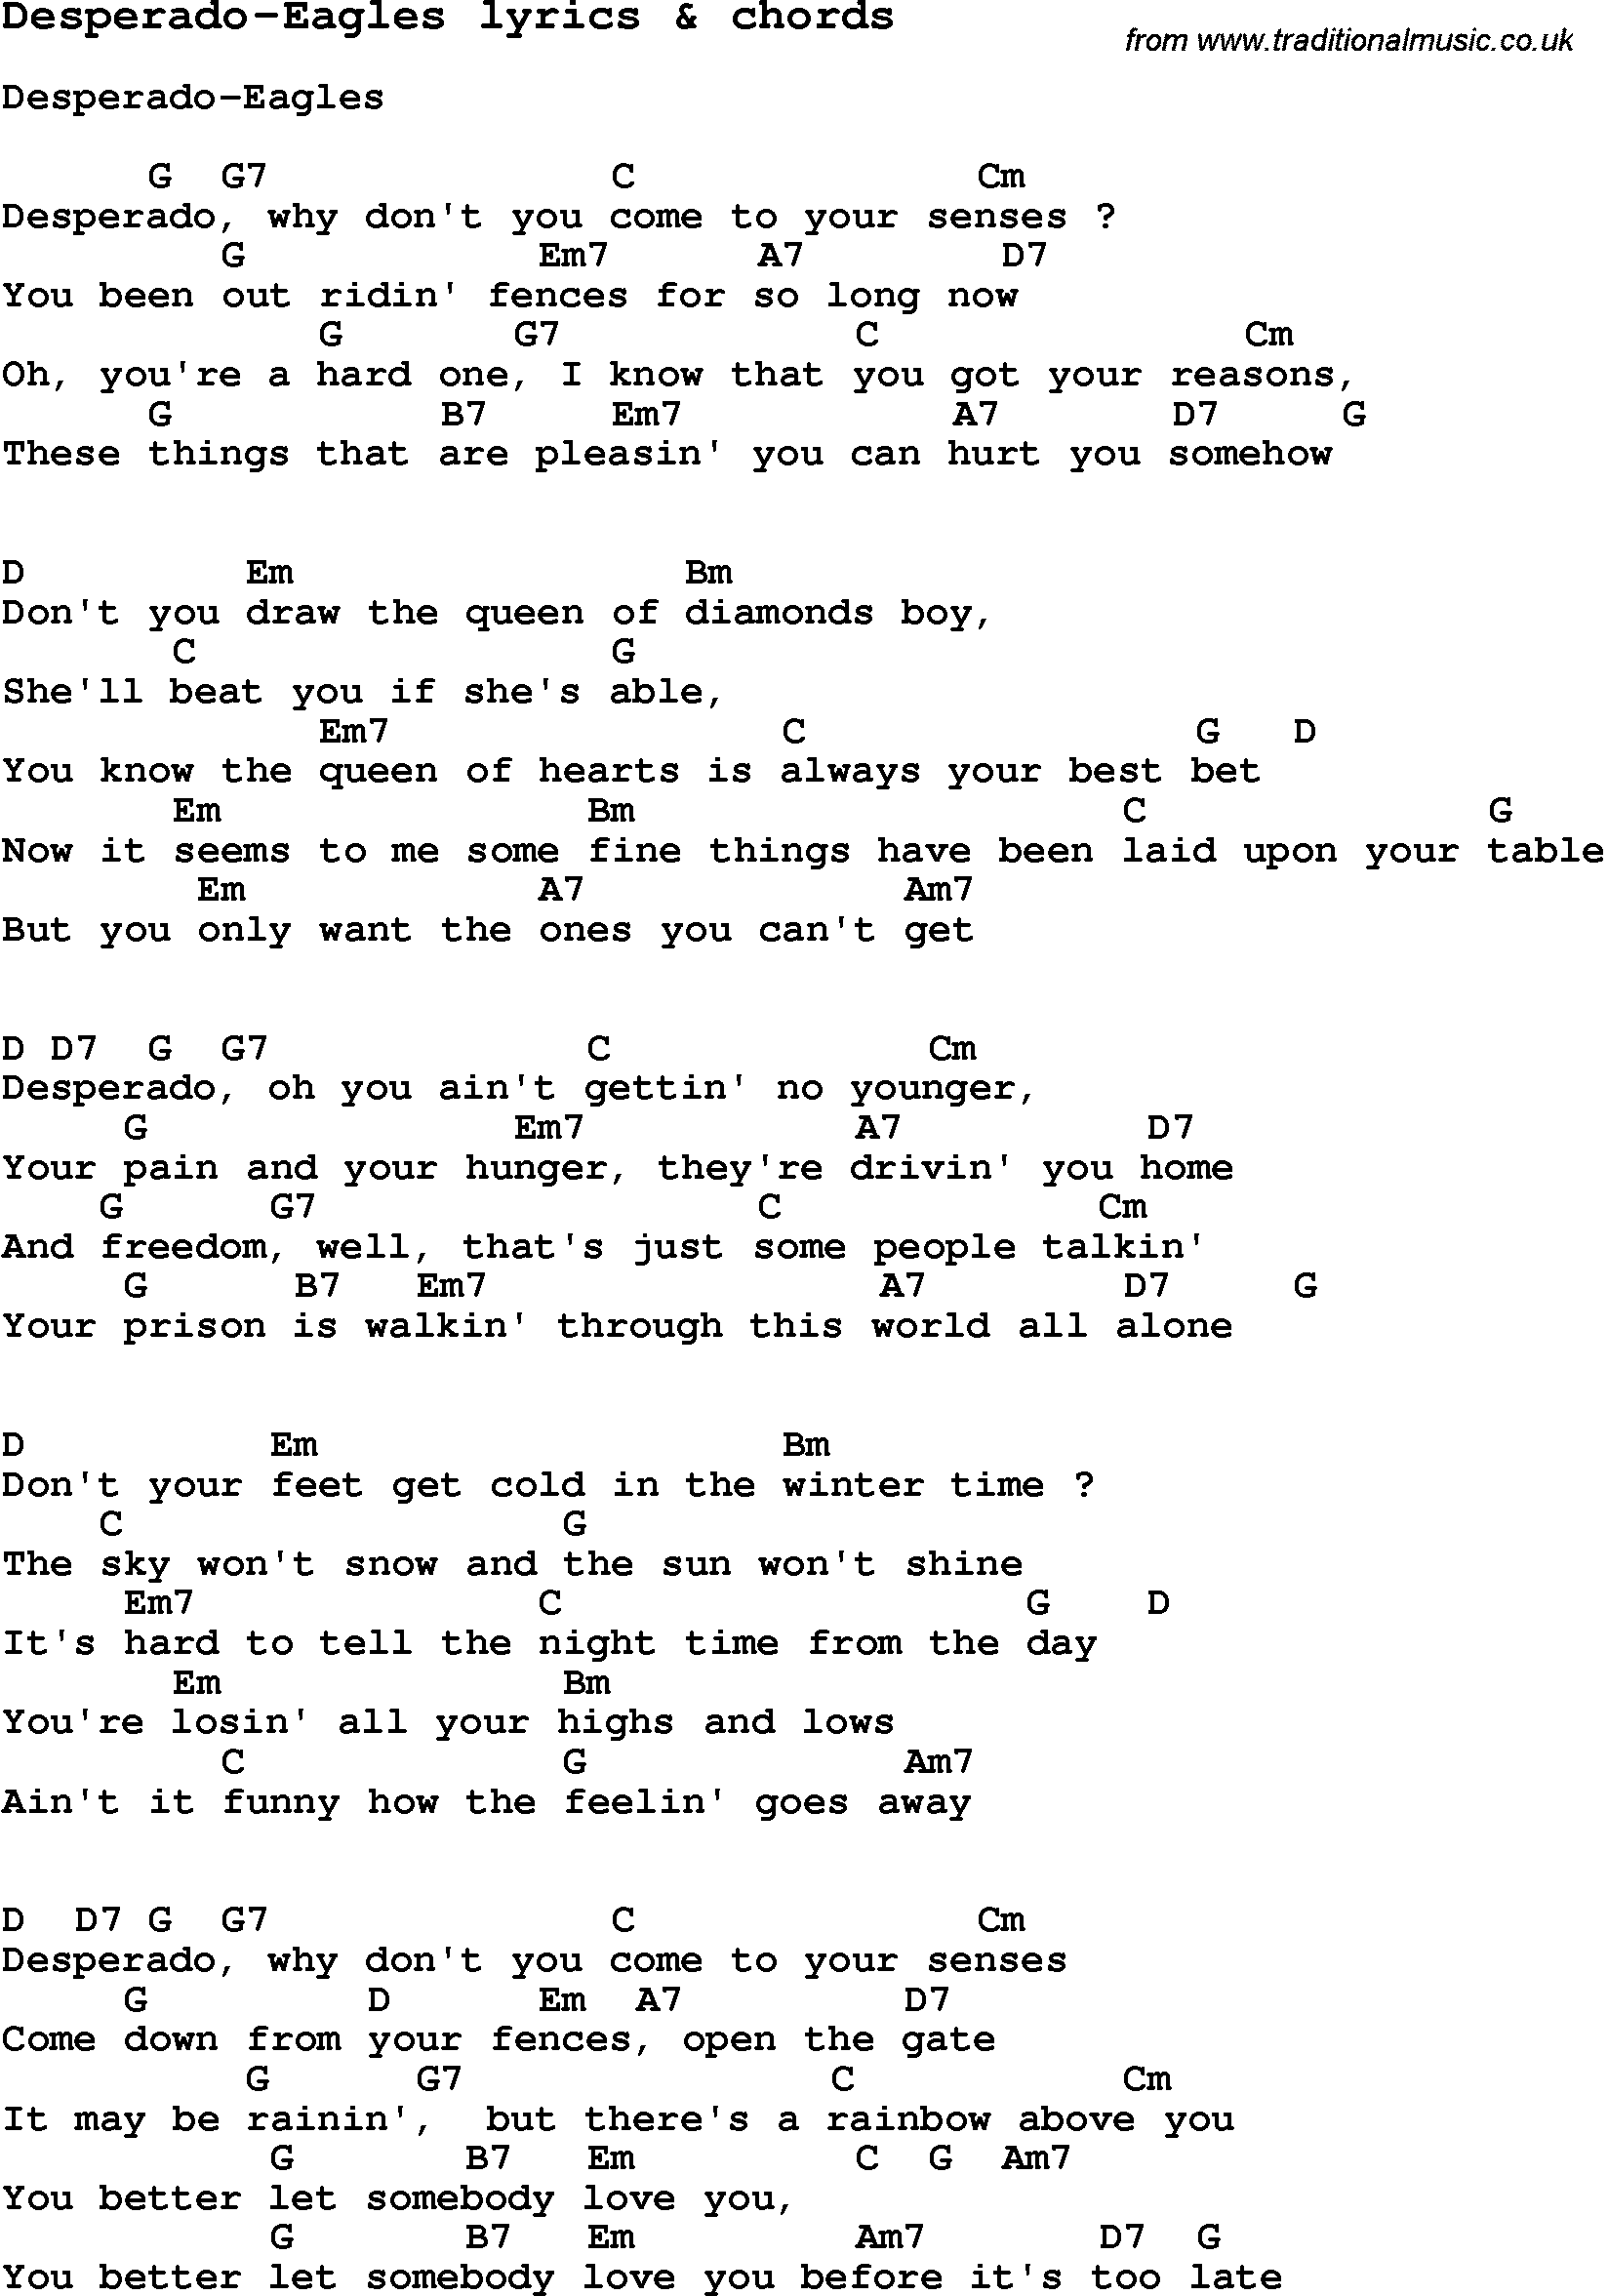 Love Song Lyrics for:Desperado-The Eagles with chords.